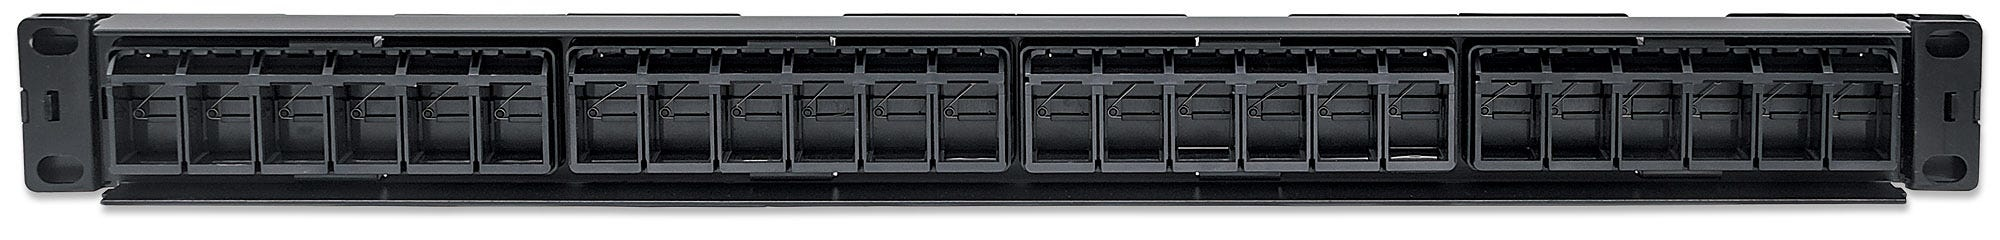 Intellinet Patch Panel, Blank, 1U, 24-Port, Black